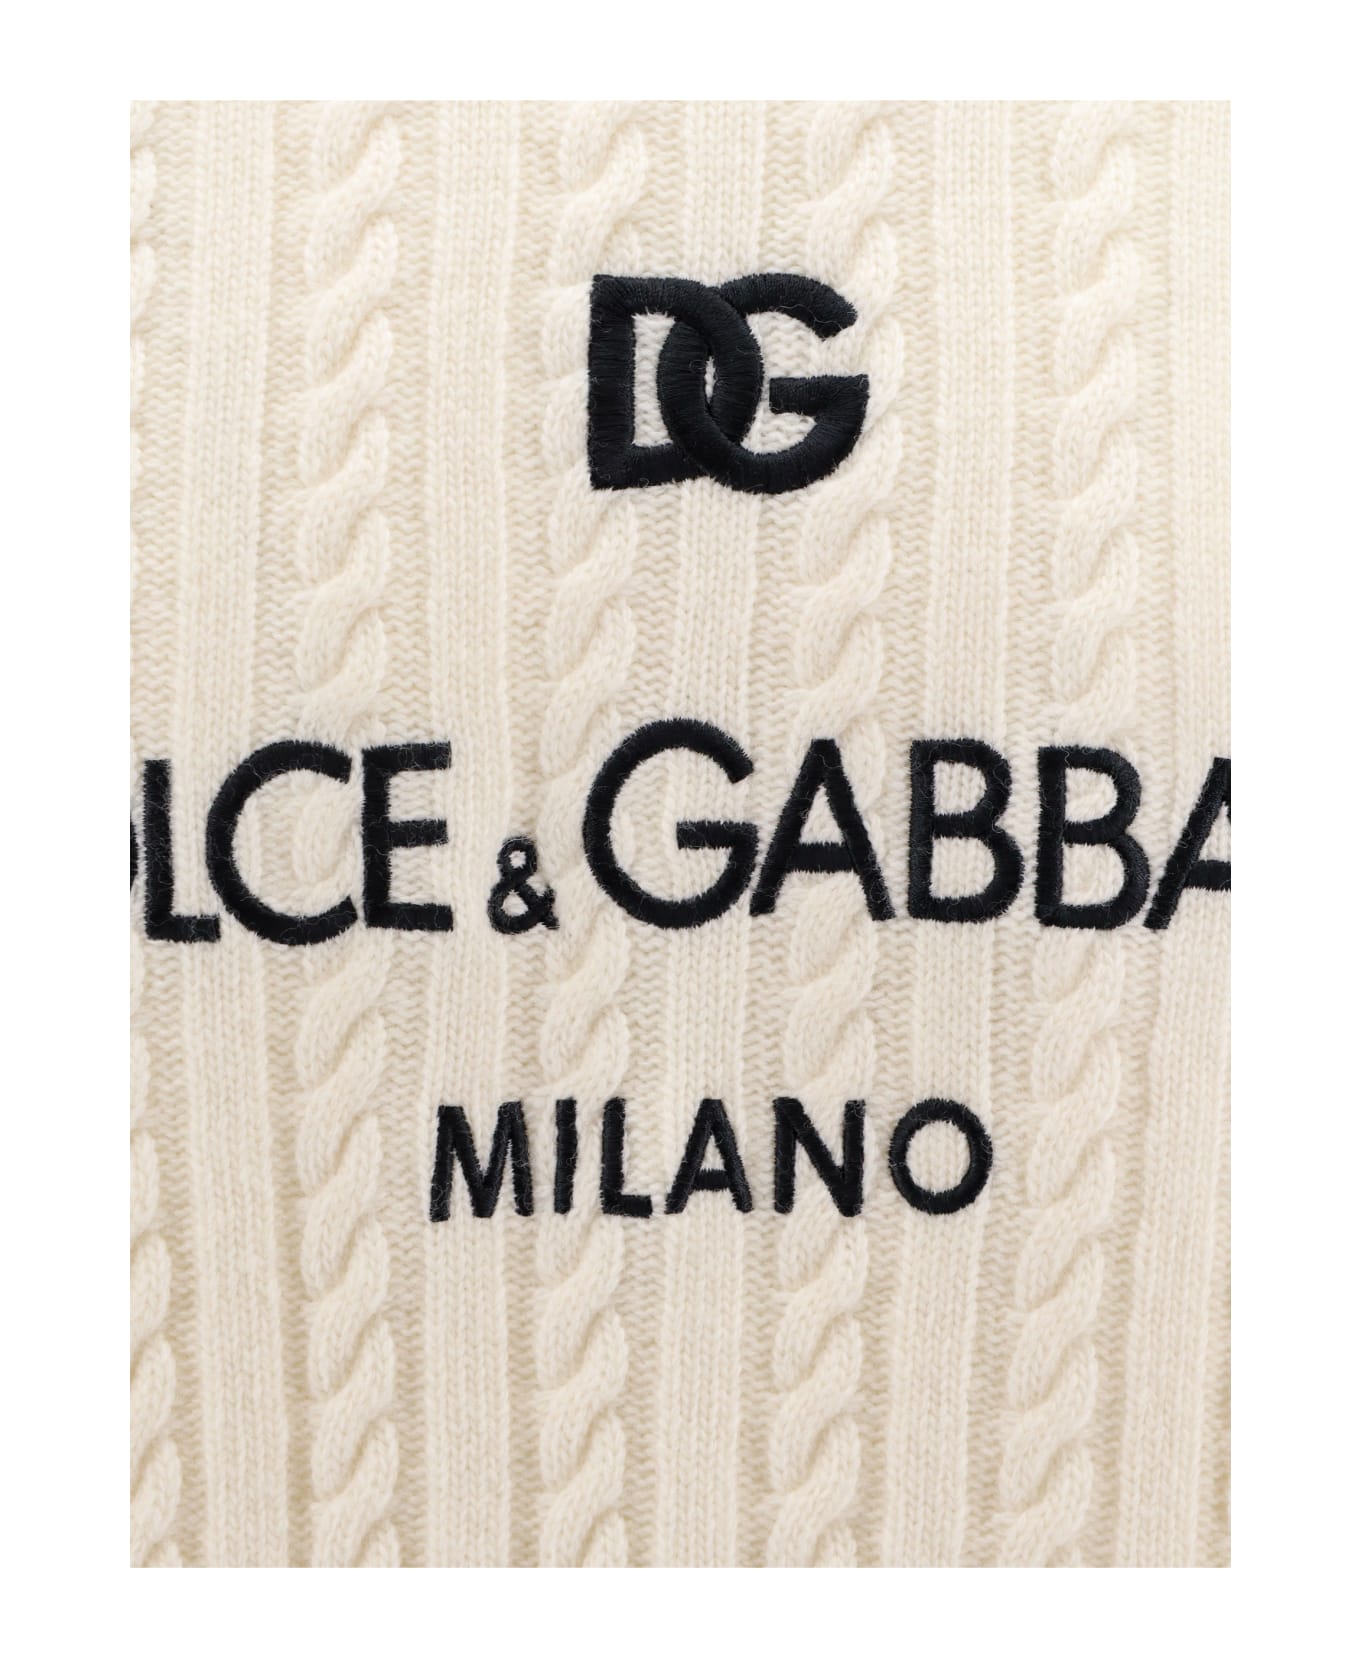 Dolce & Gabbana Braided Wool Sweater With Logo - White ニットウェア